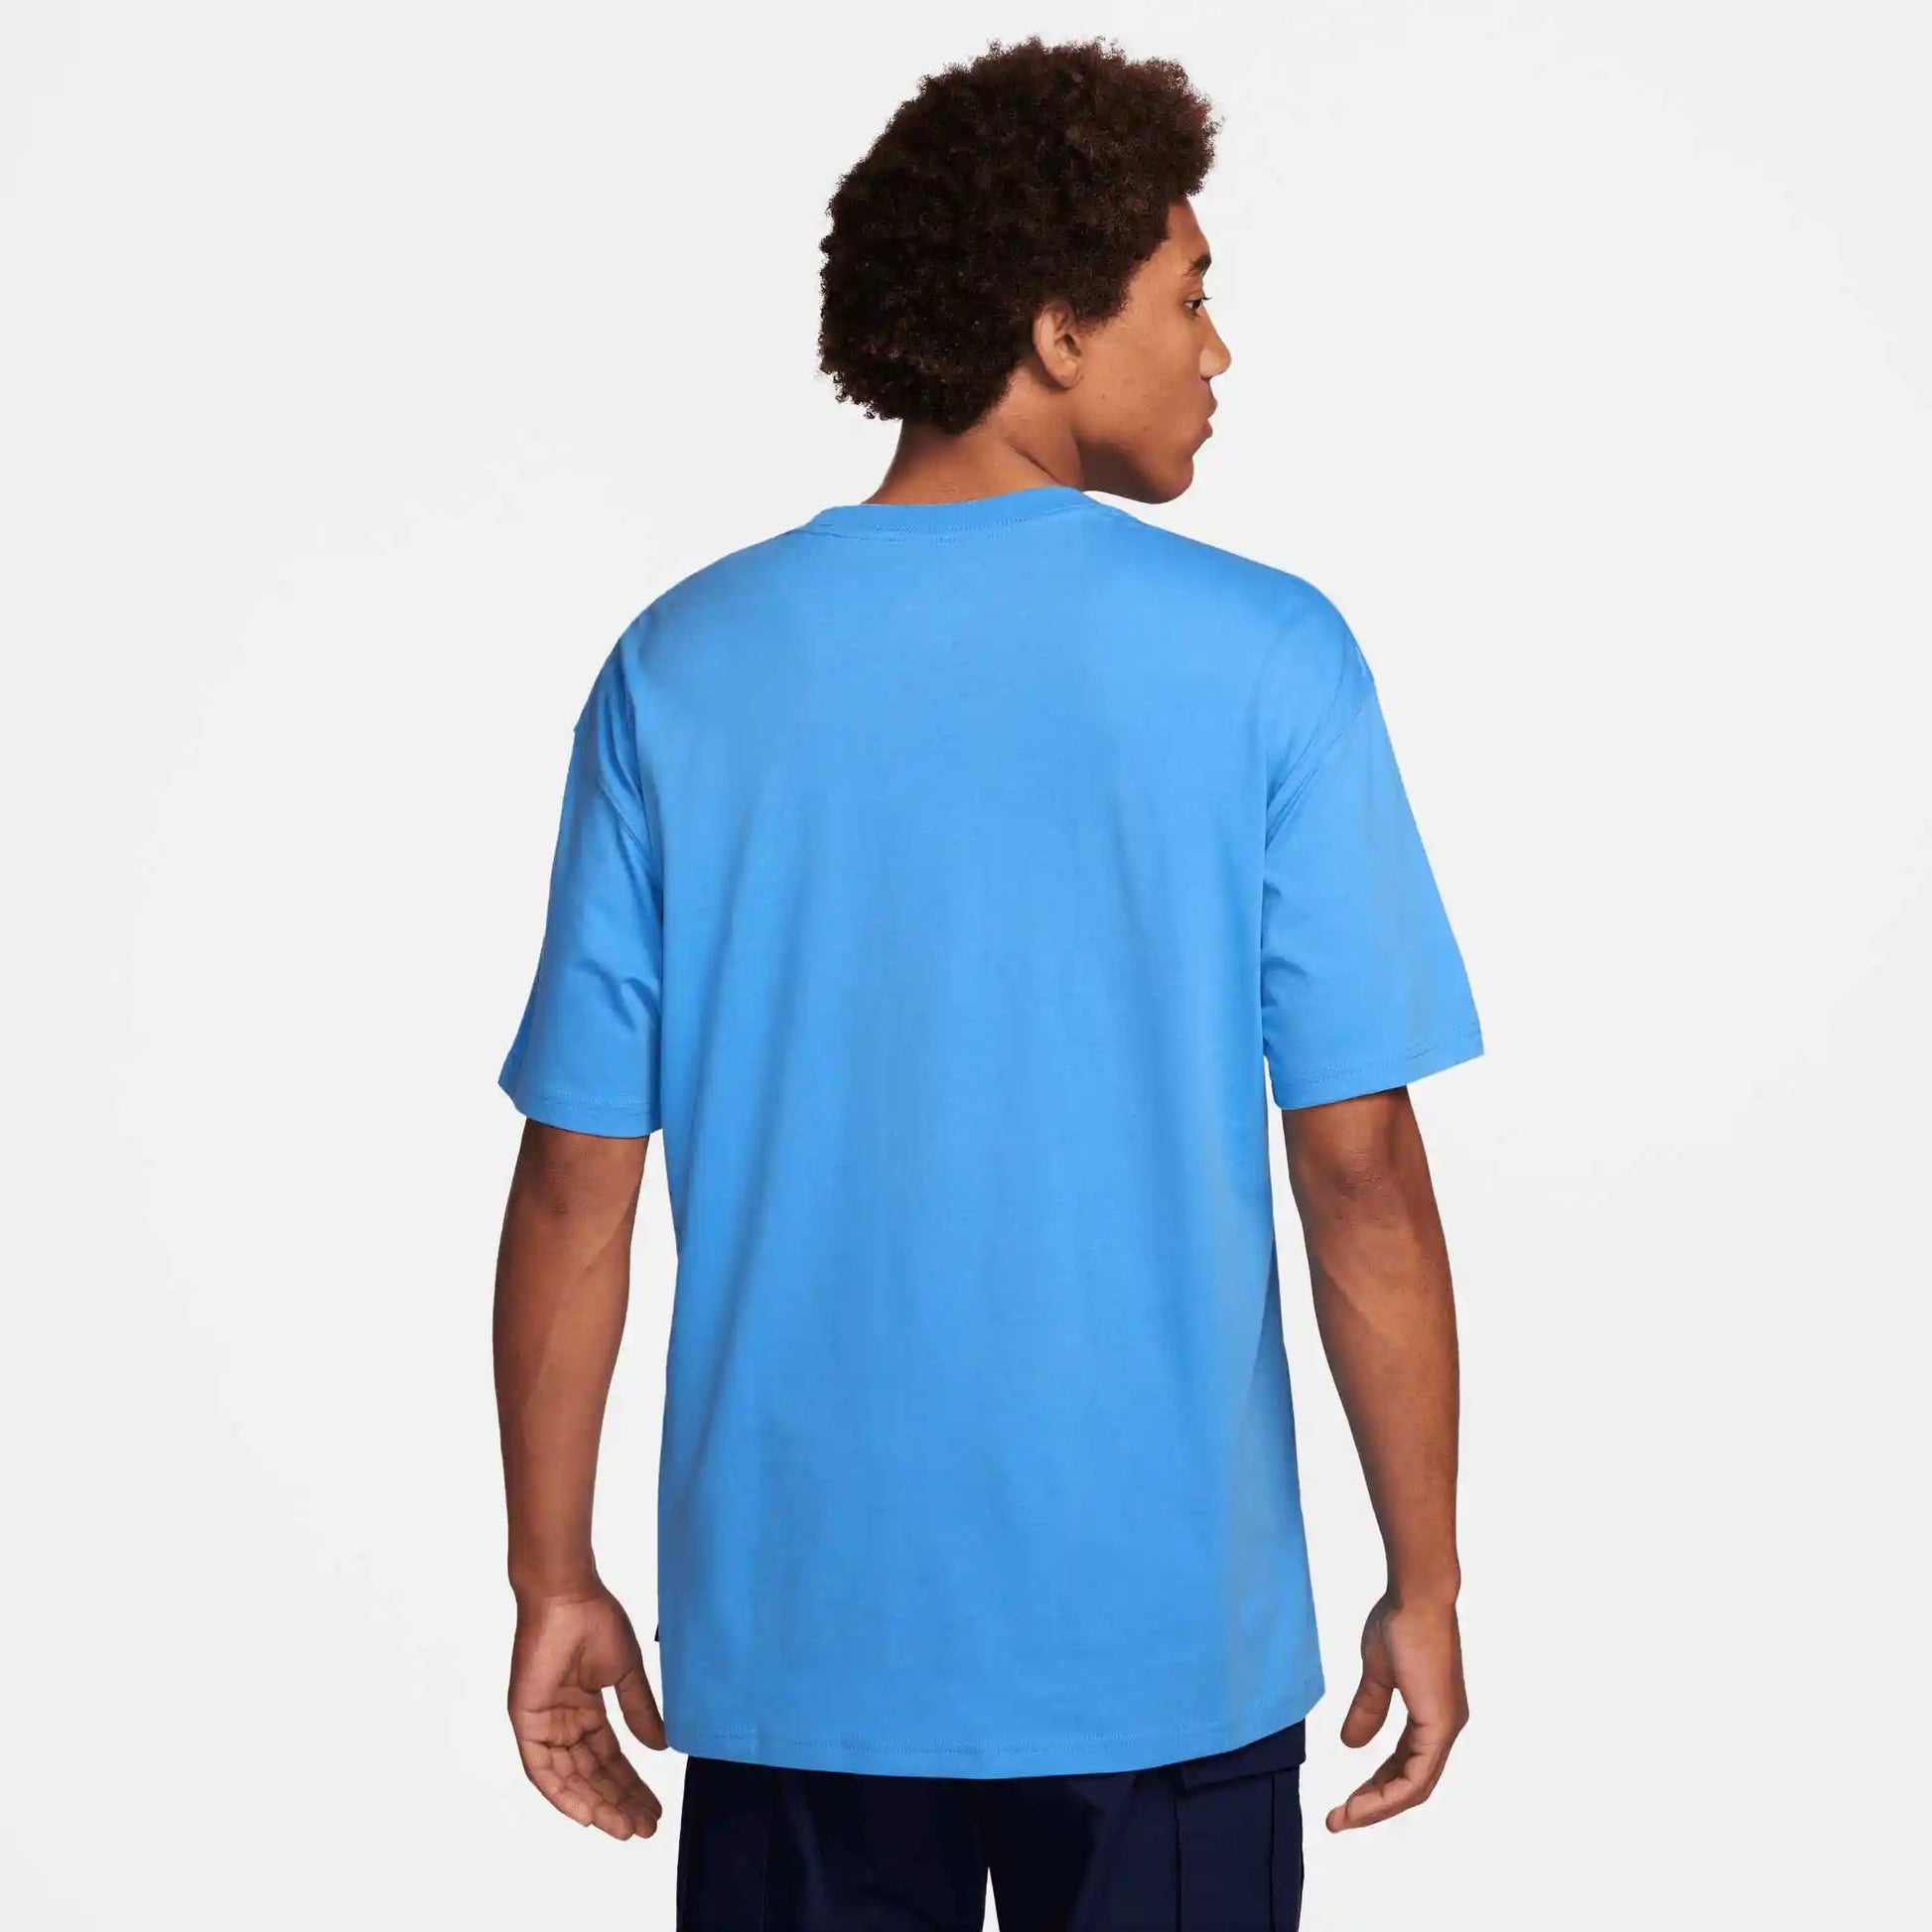 Nike SB Logo Skate T-Shirt, university blue/black - Tiki Room Skateboards - 5